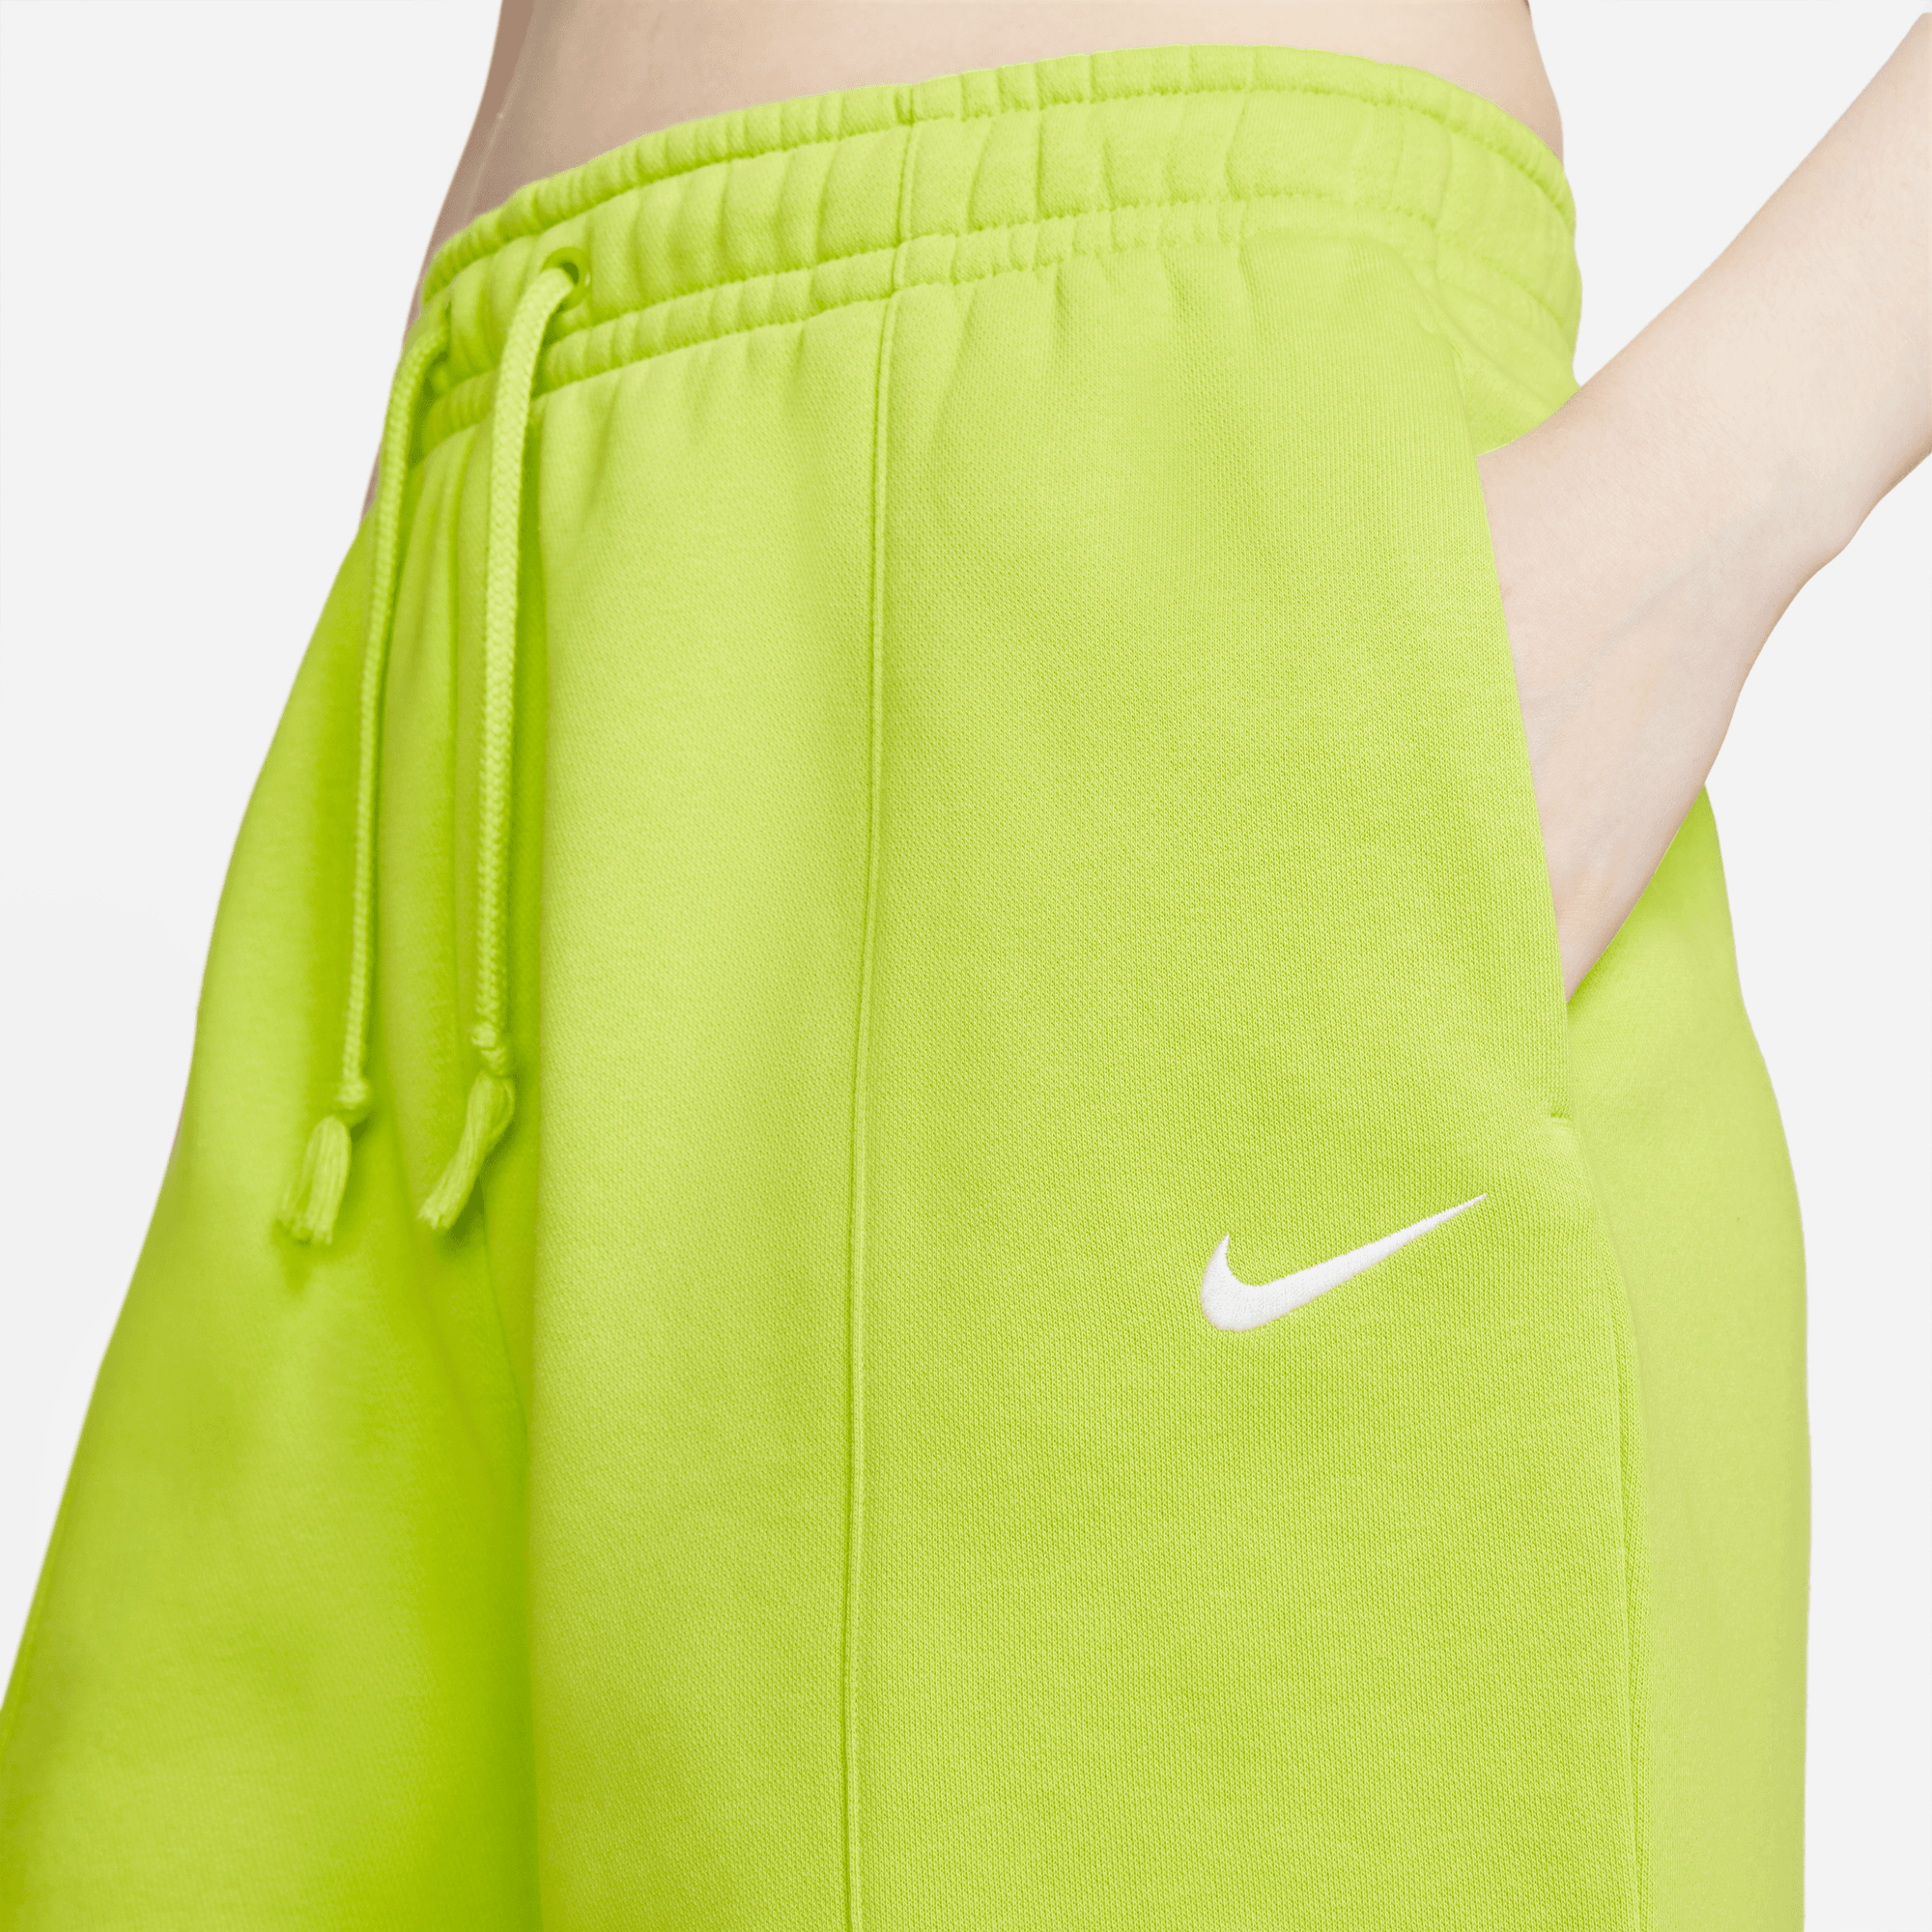 Nike Women's Essential Fleece Short Atomic Green